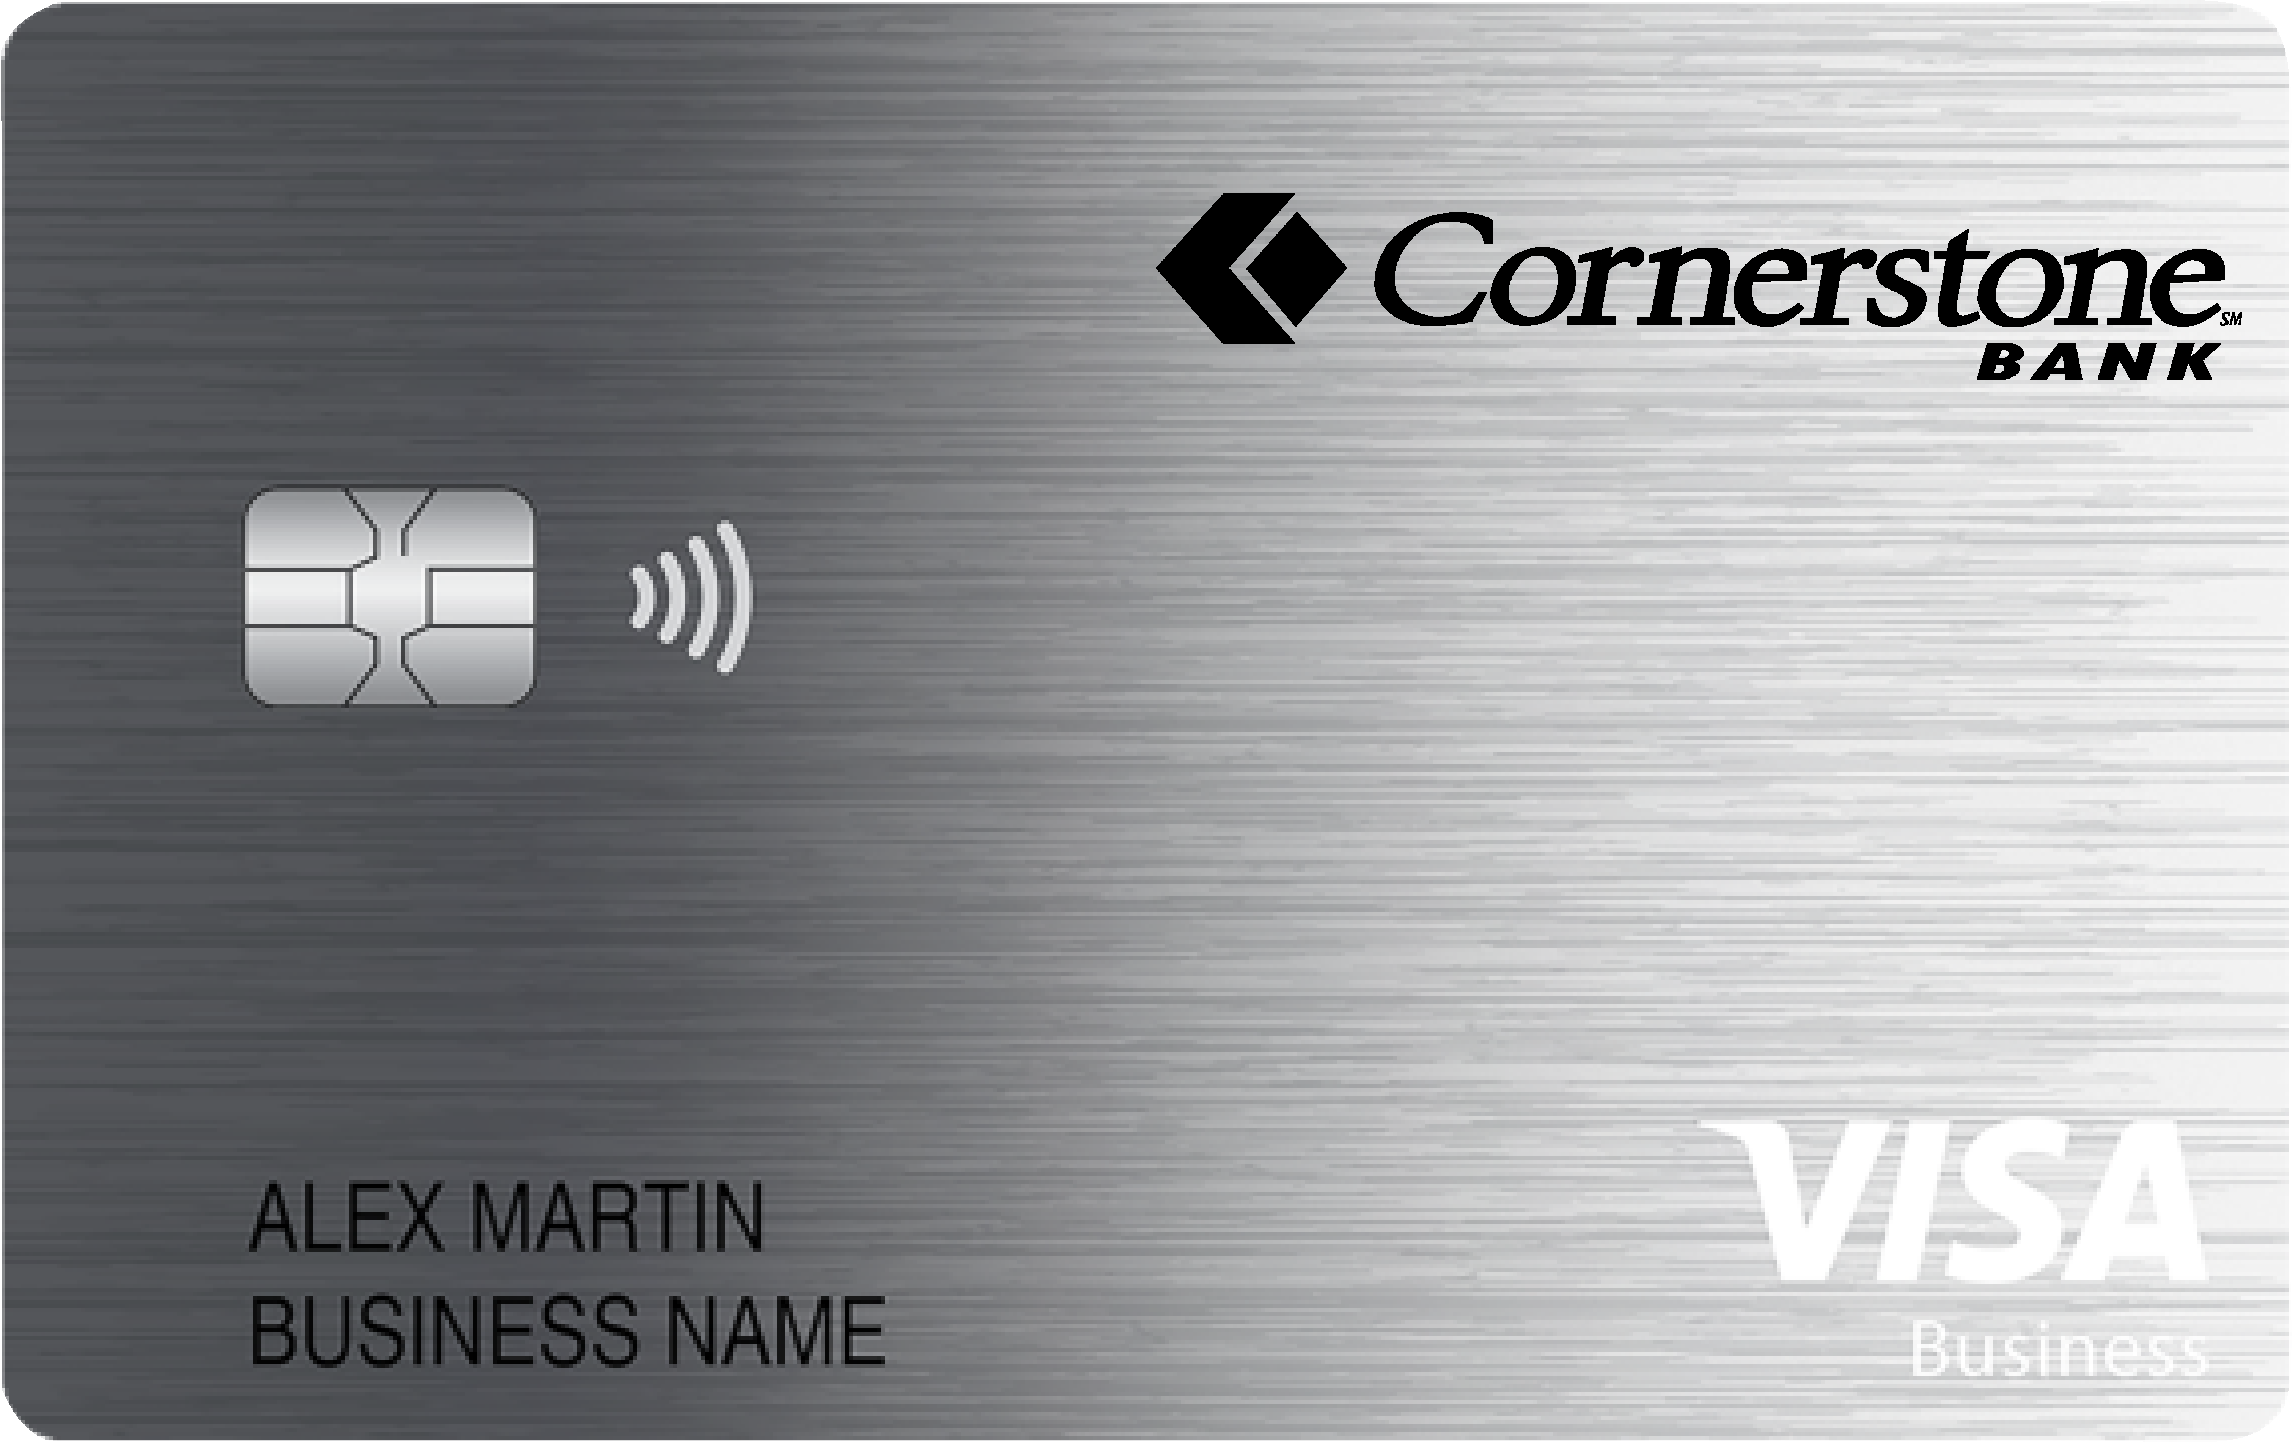 Cornerstone Bank Business Real Rewards Card